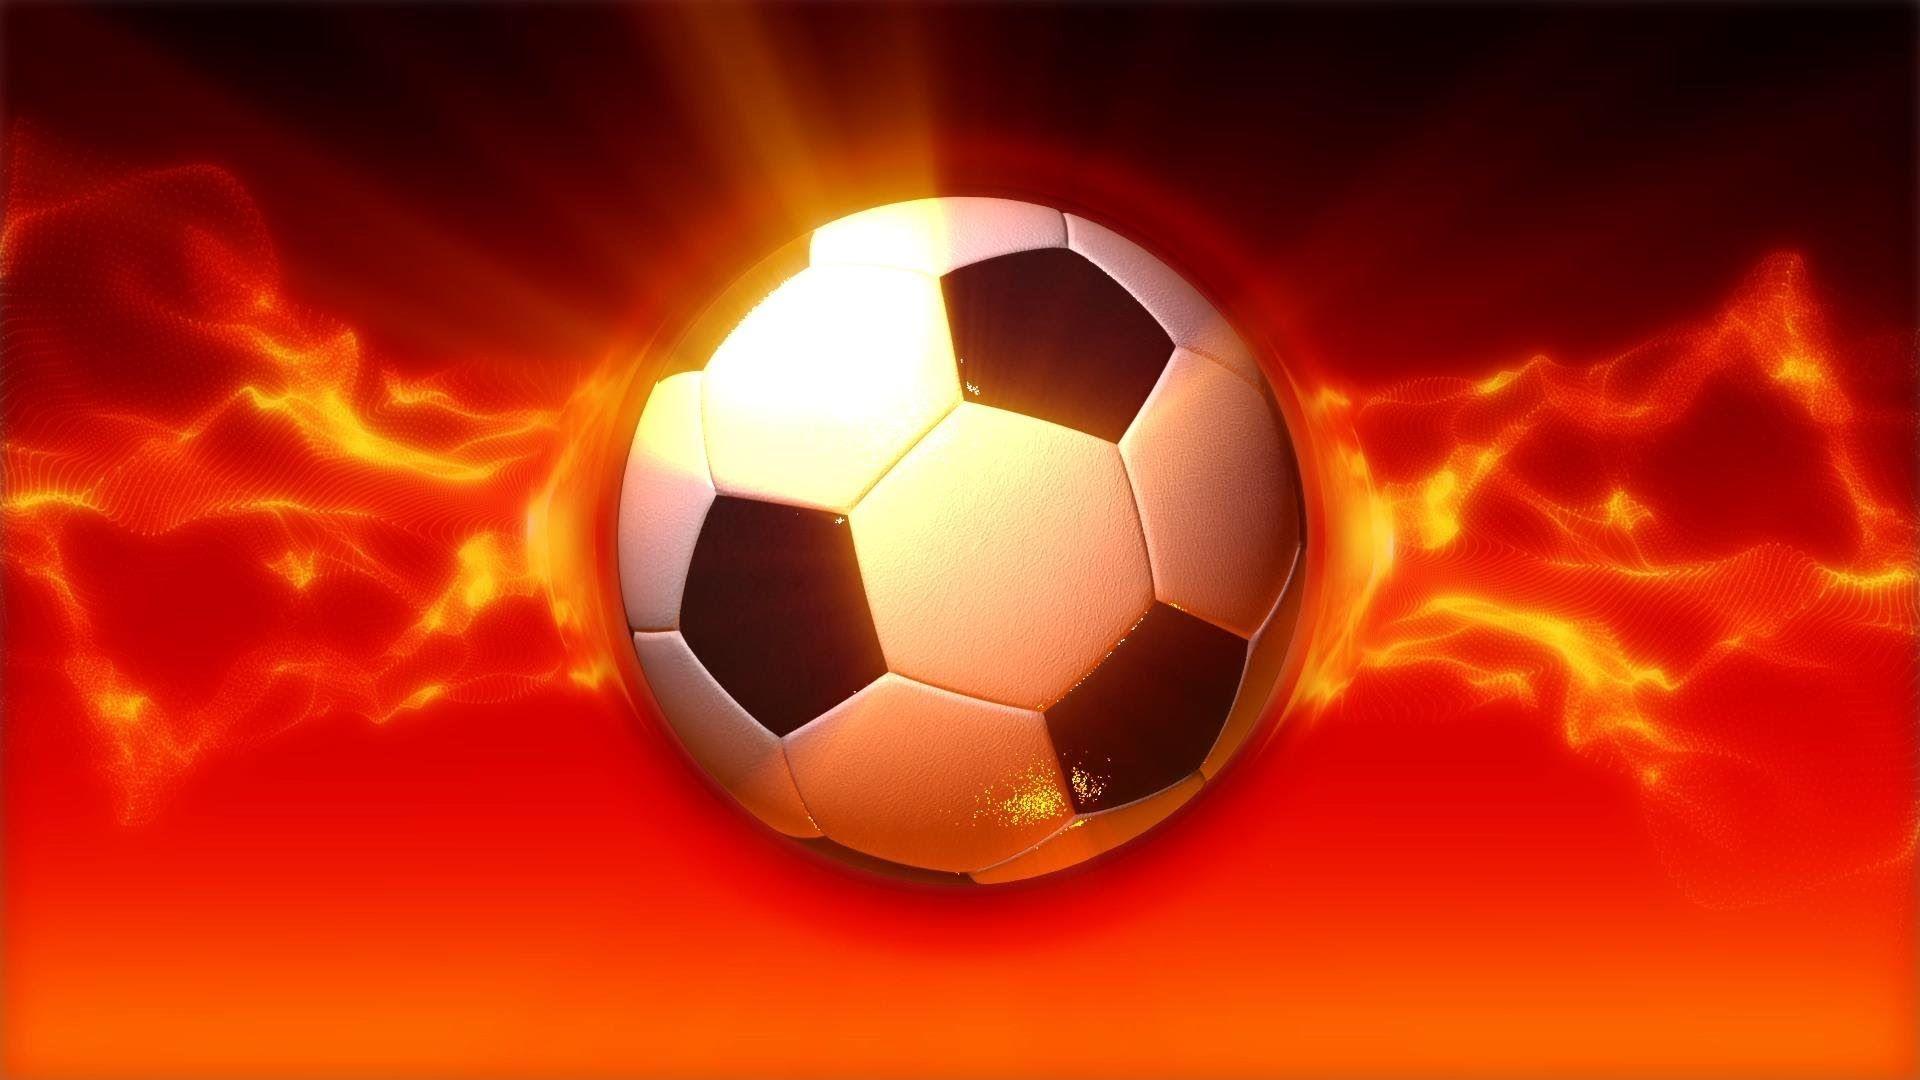 Soccer Ball On Fire Loop